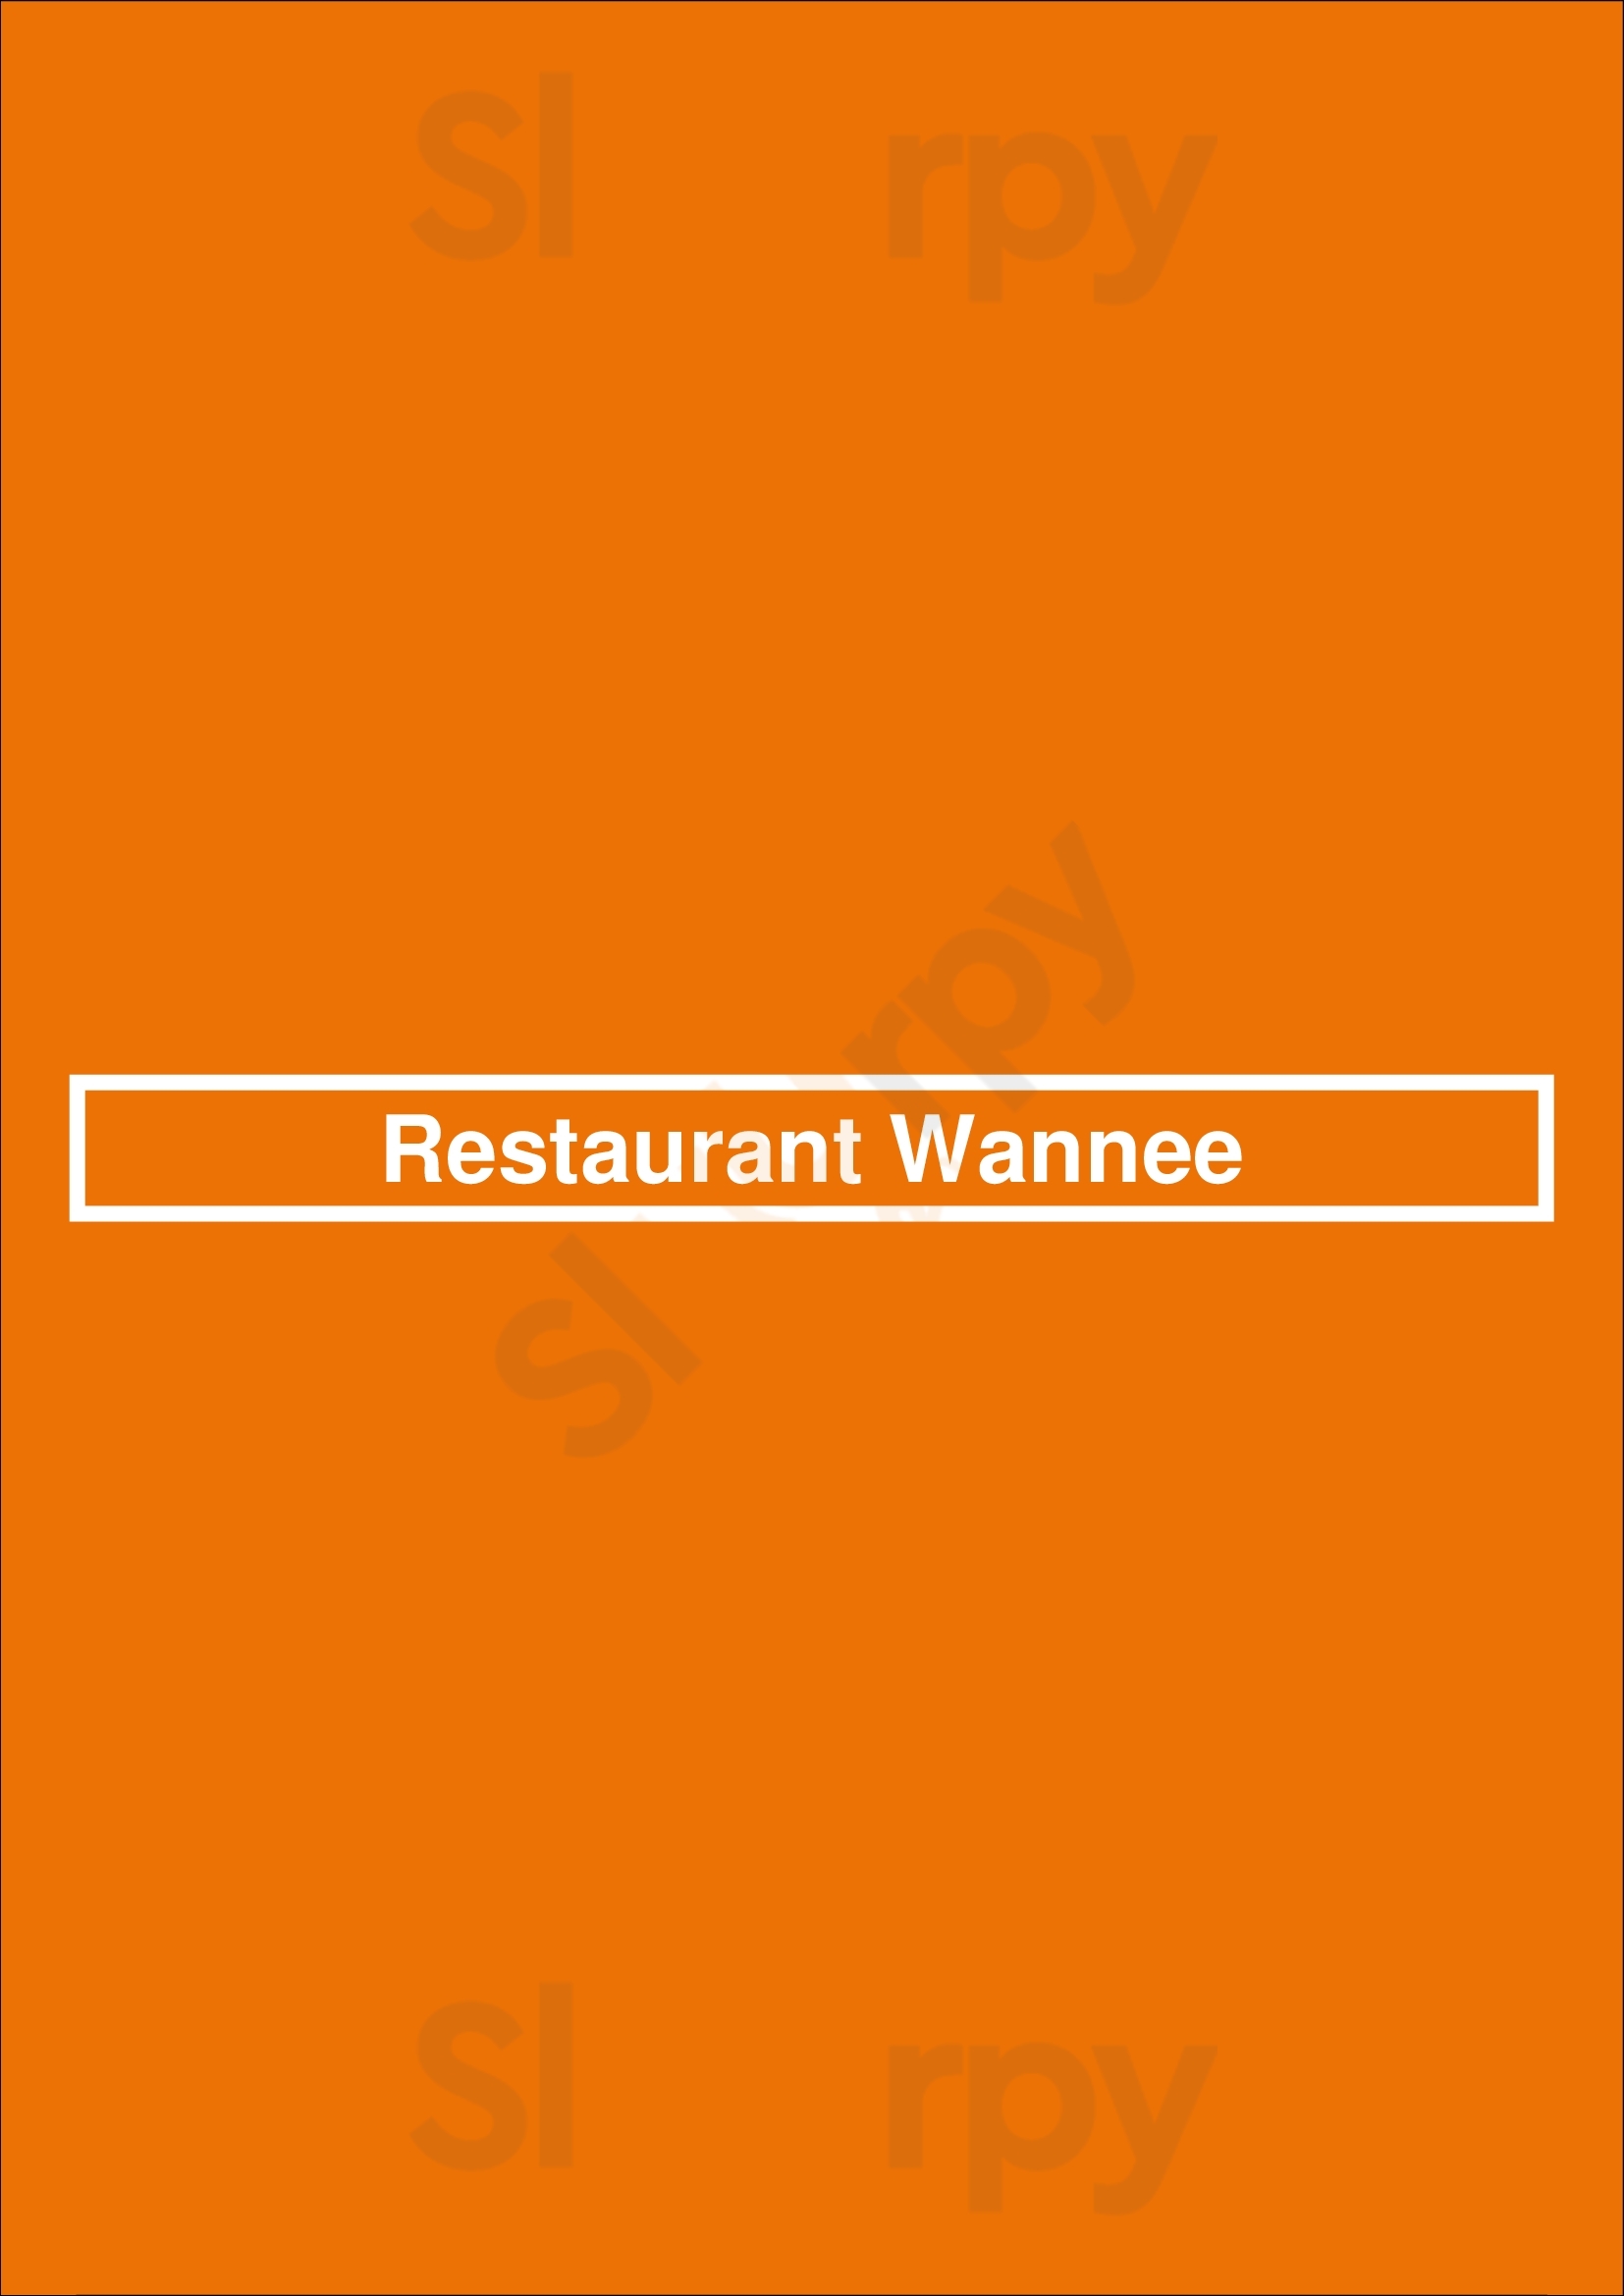 Restaurant Wannee Leeuwarden Menu - 1